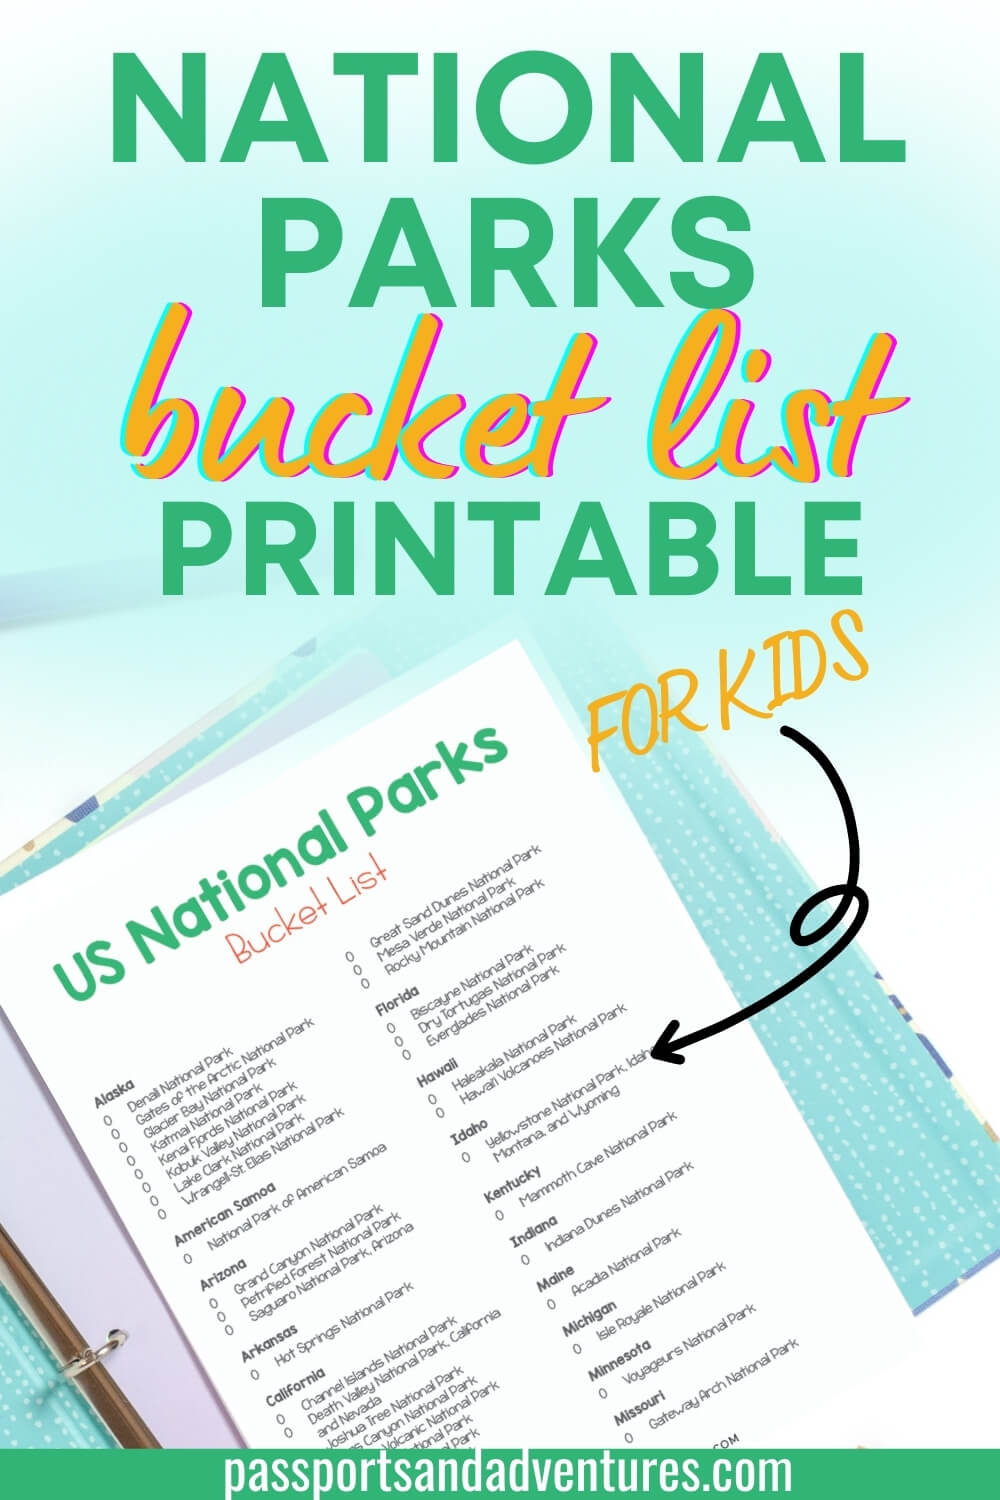 Us National Parks Bucket List Printable For Kids